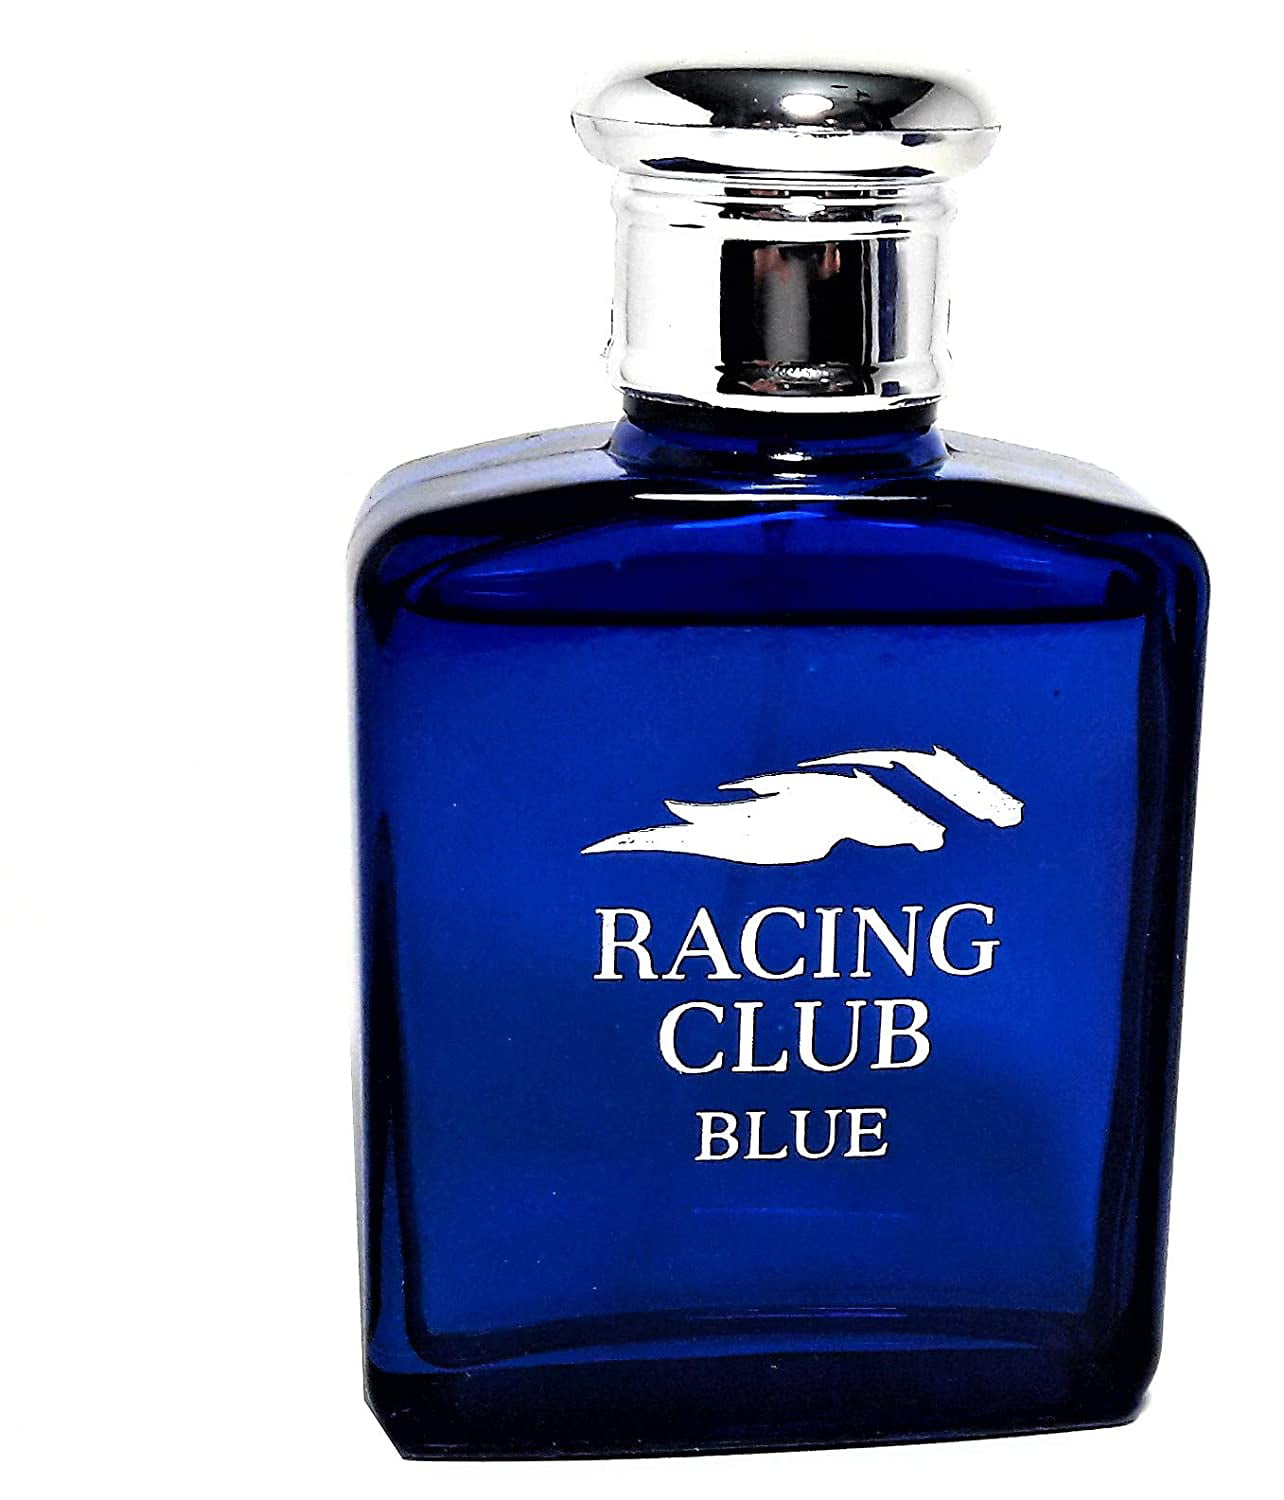 RACING CLUB BLUE men's designer EDT cologne  oz spray 